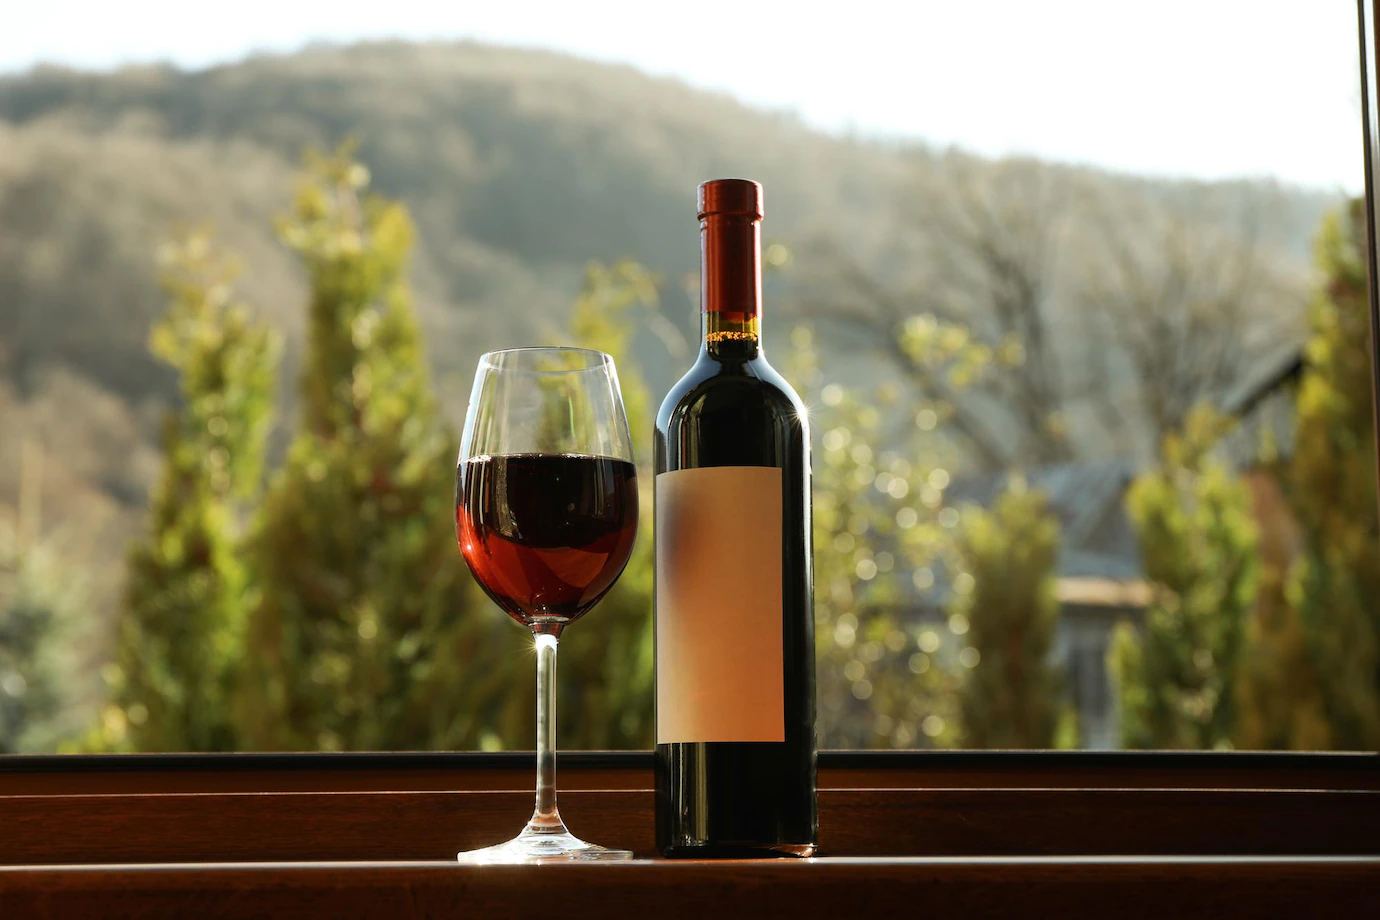 glass-bottle-wine-stands-wooden-windowsill_185193-81992.jpg